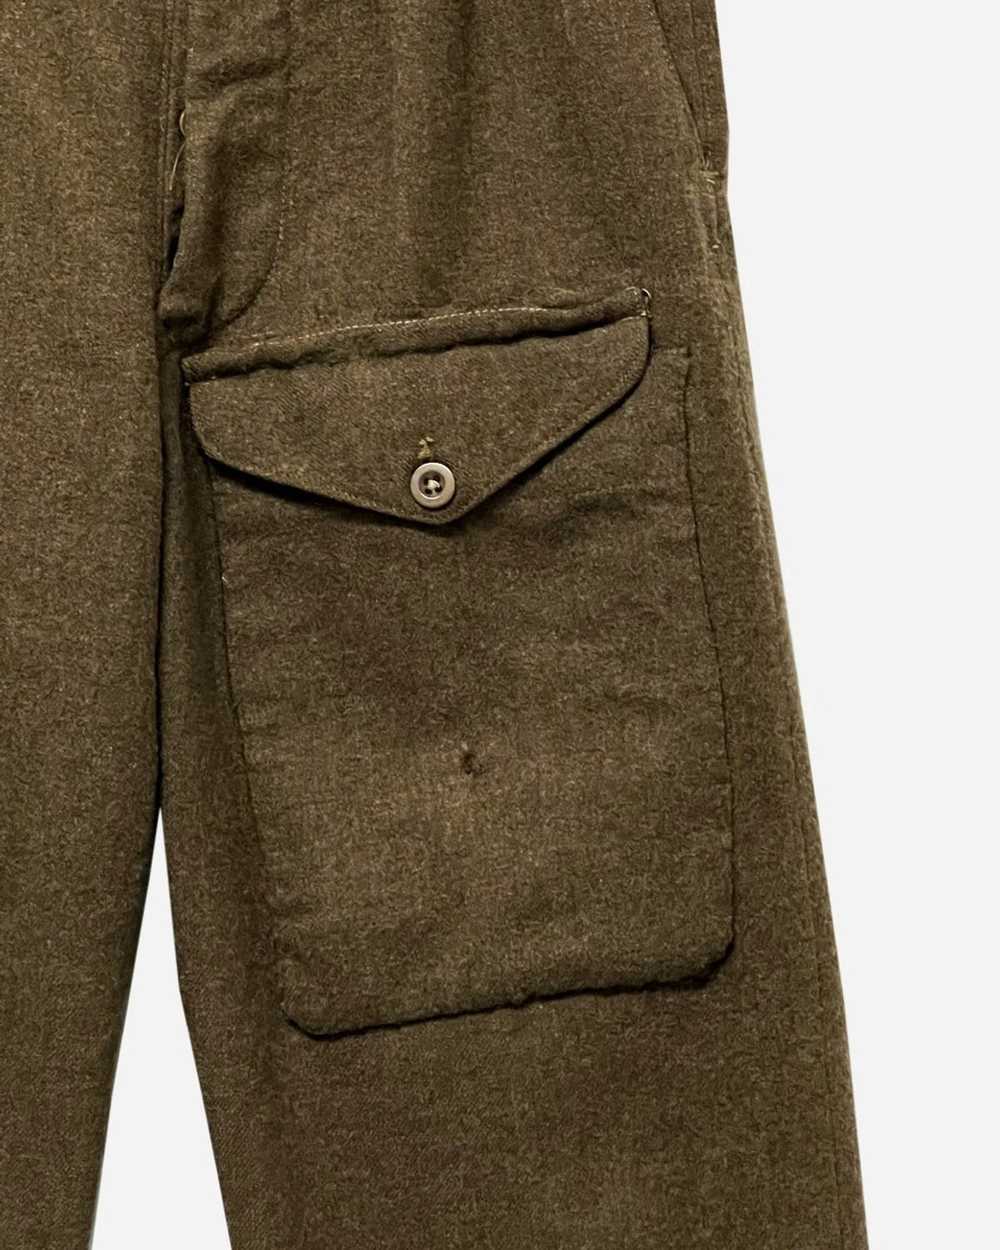 Military × Vintage vintage 1949 dress pants - image 3